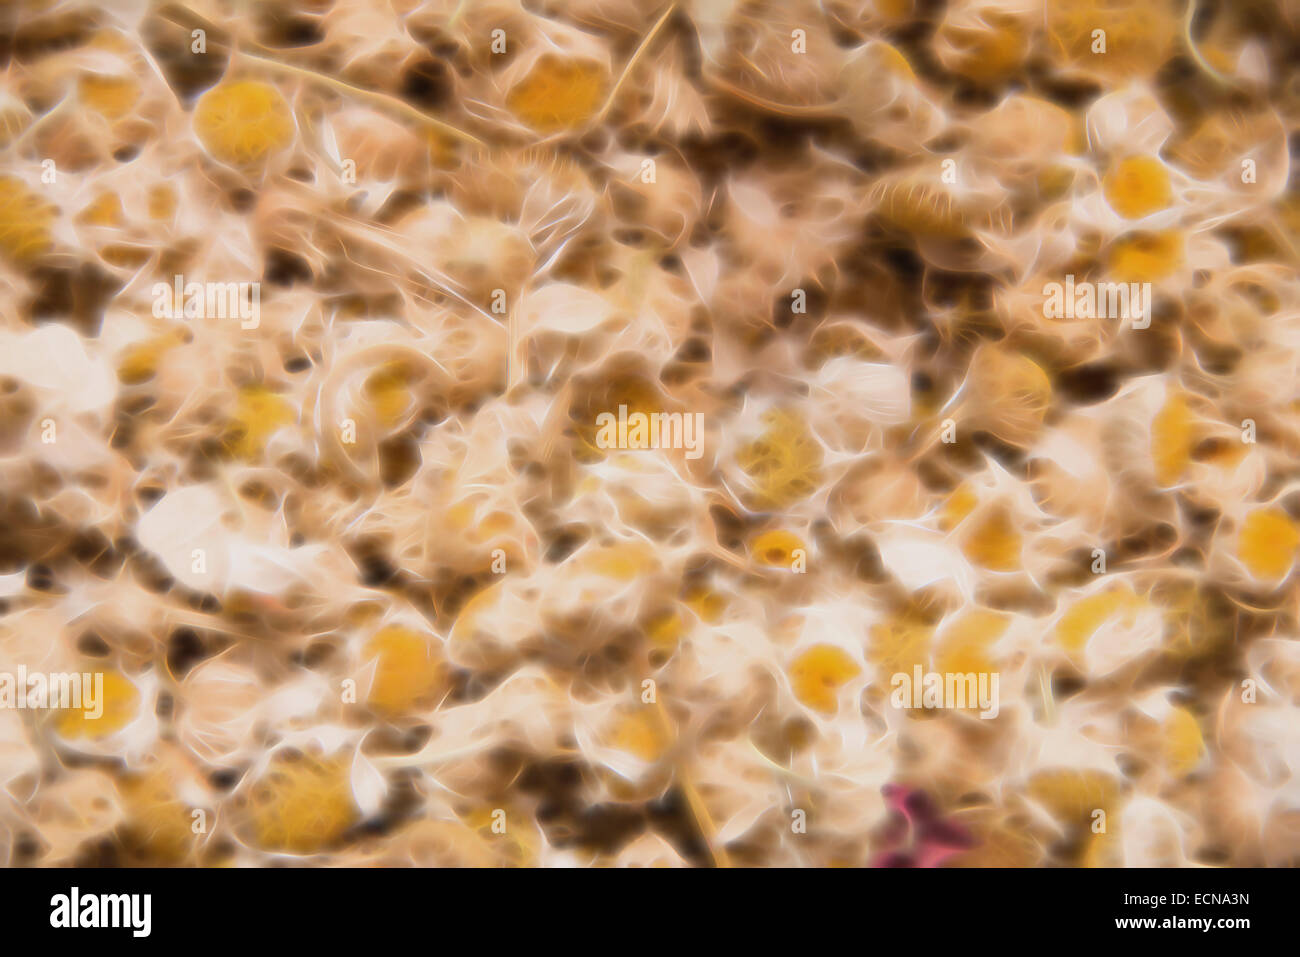 Resumen Antecedentes suave imagen a partir de una imagen base de flores secas Foto de stock